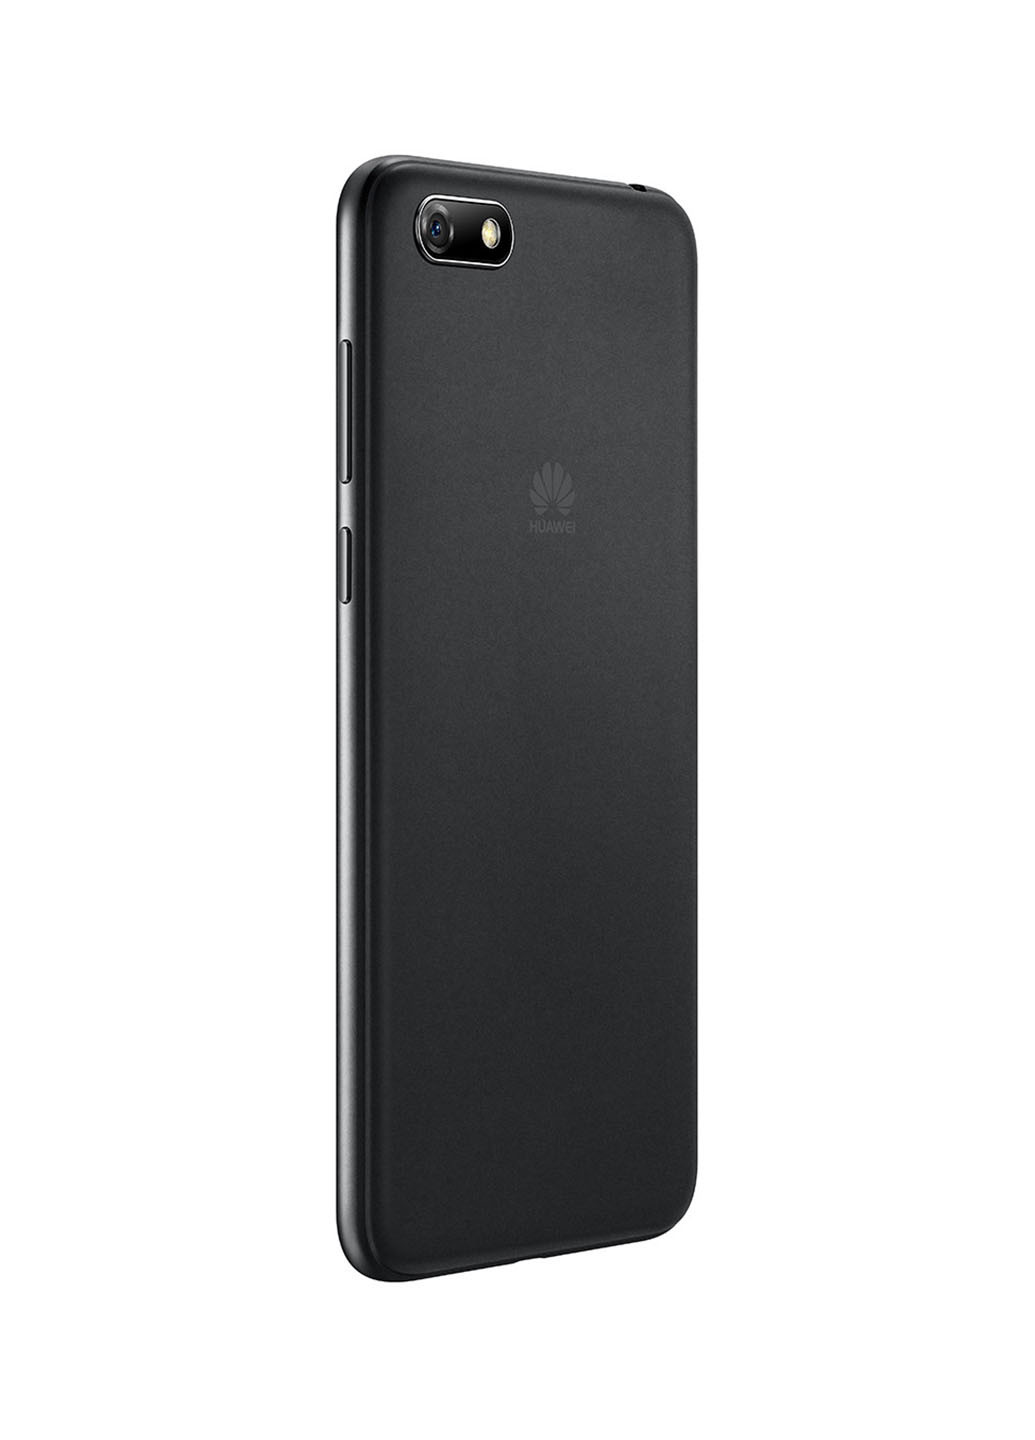 Смартфон Huawei y5 2018 2/16 black (dra-l21) (163174104)